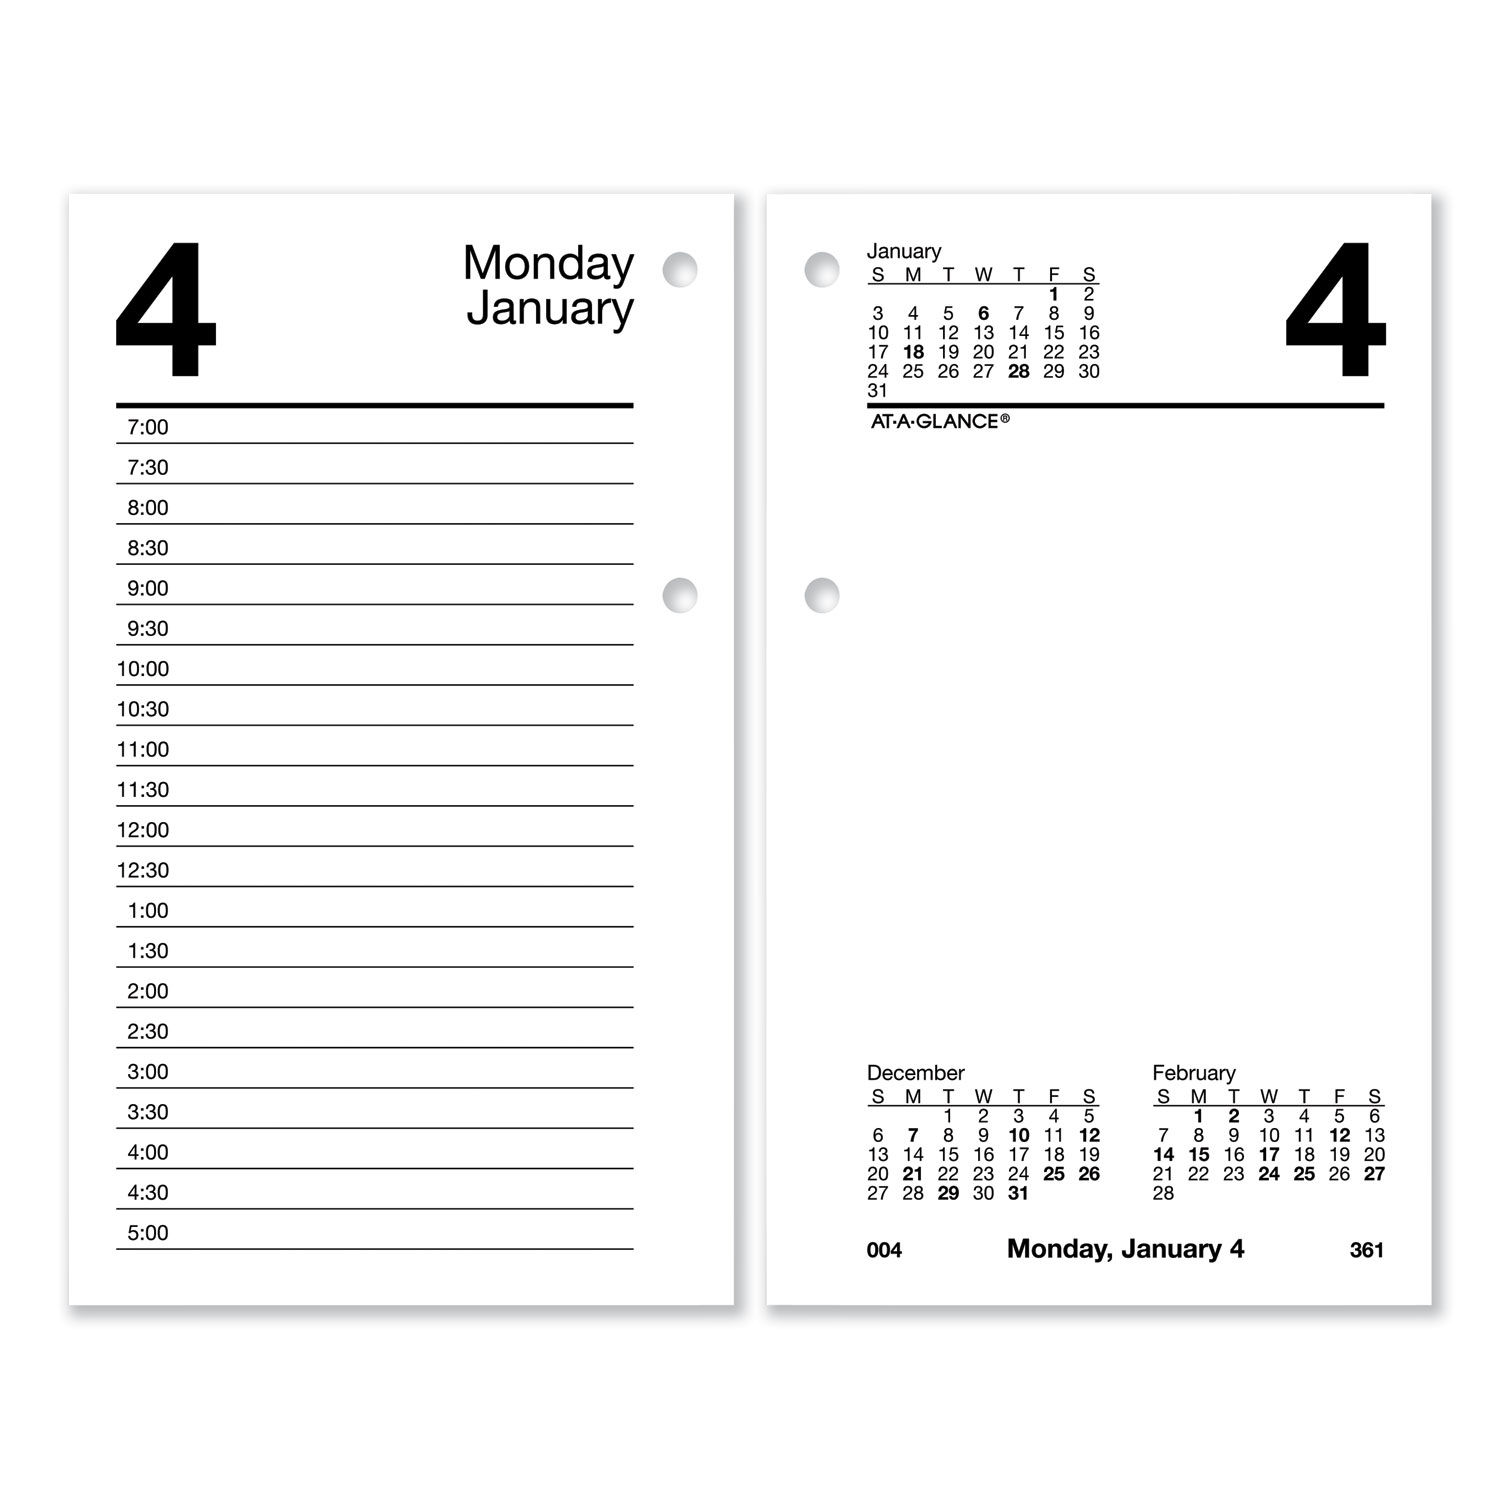 50 Custom Logo 2024 Refill Weekly Pocket Calendar Bulk Imprinted Promotional Products Calendars, Organizers & Planners by Amsterdam Printing